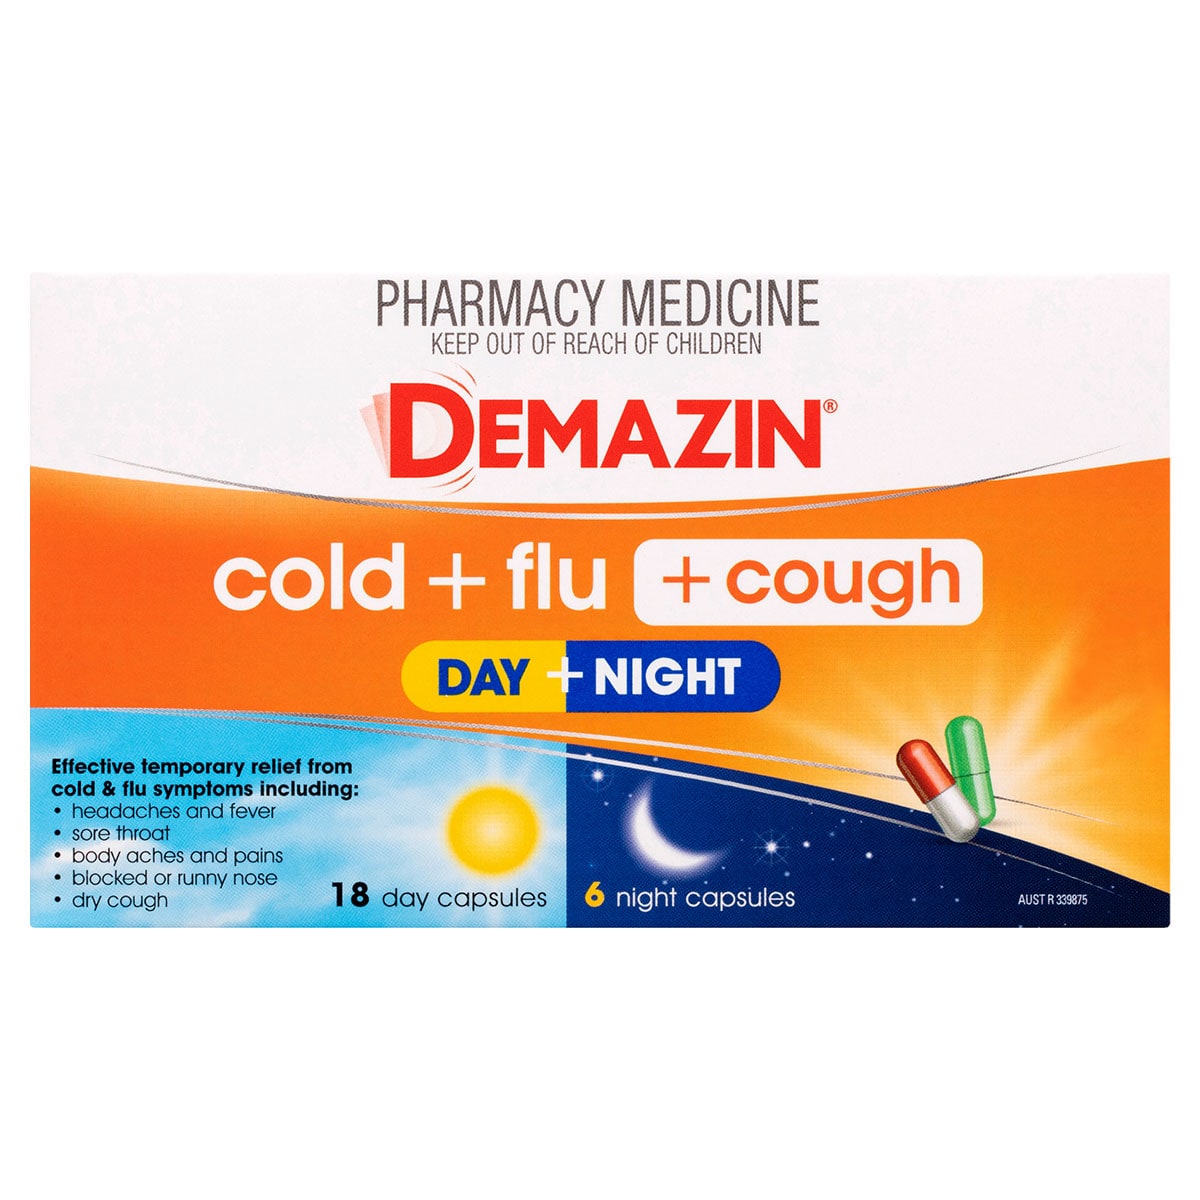 Demazin Cold & Flu + Cough Relief Day & Night 24 Capsules